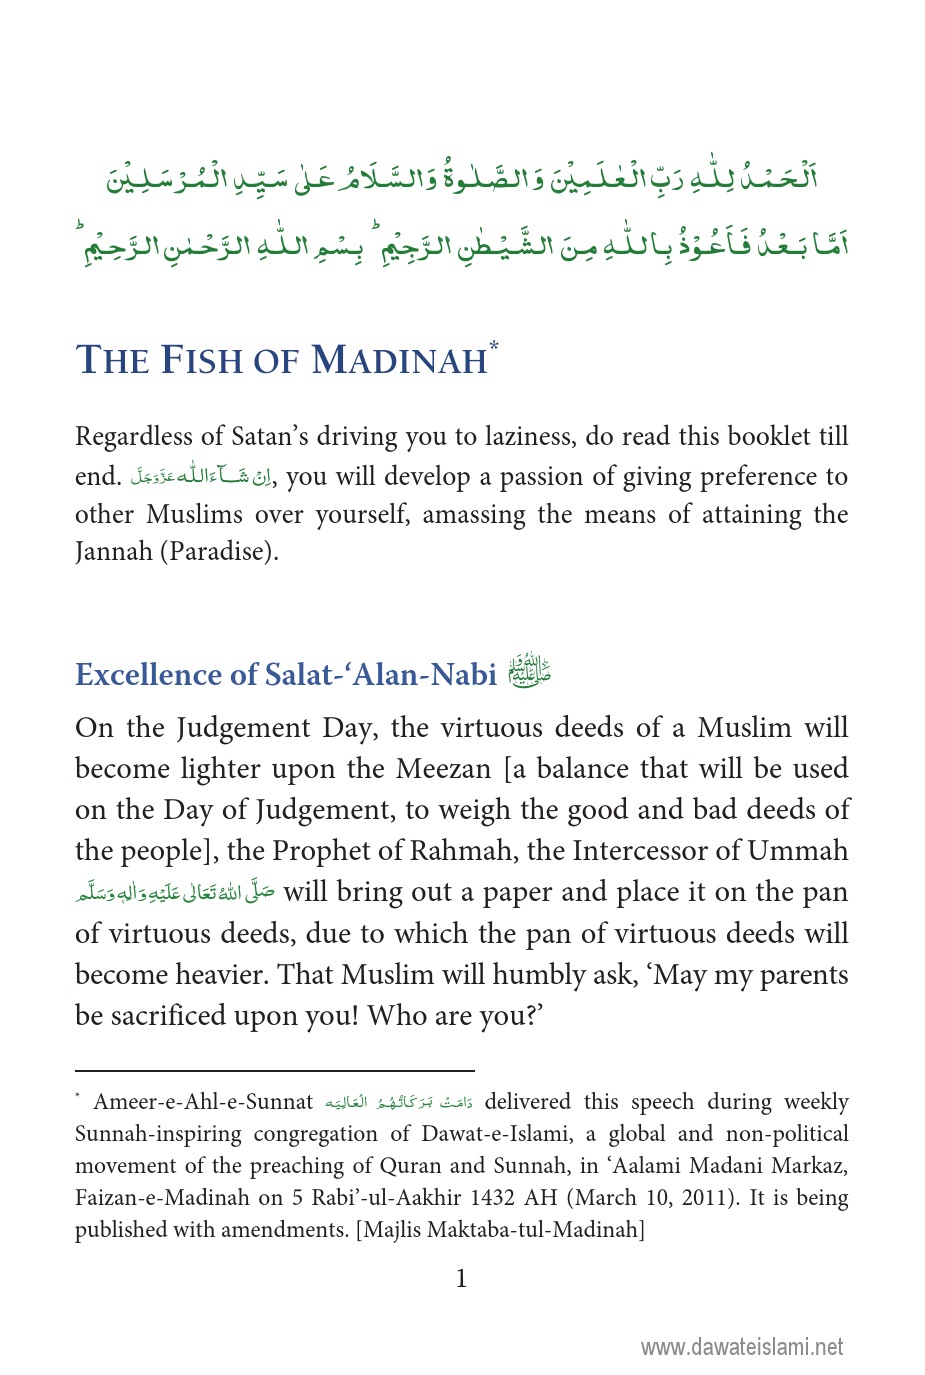 TheFishOfMadinah.pdf, 55- pages 